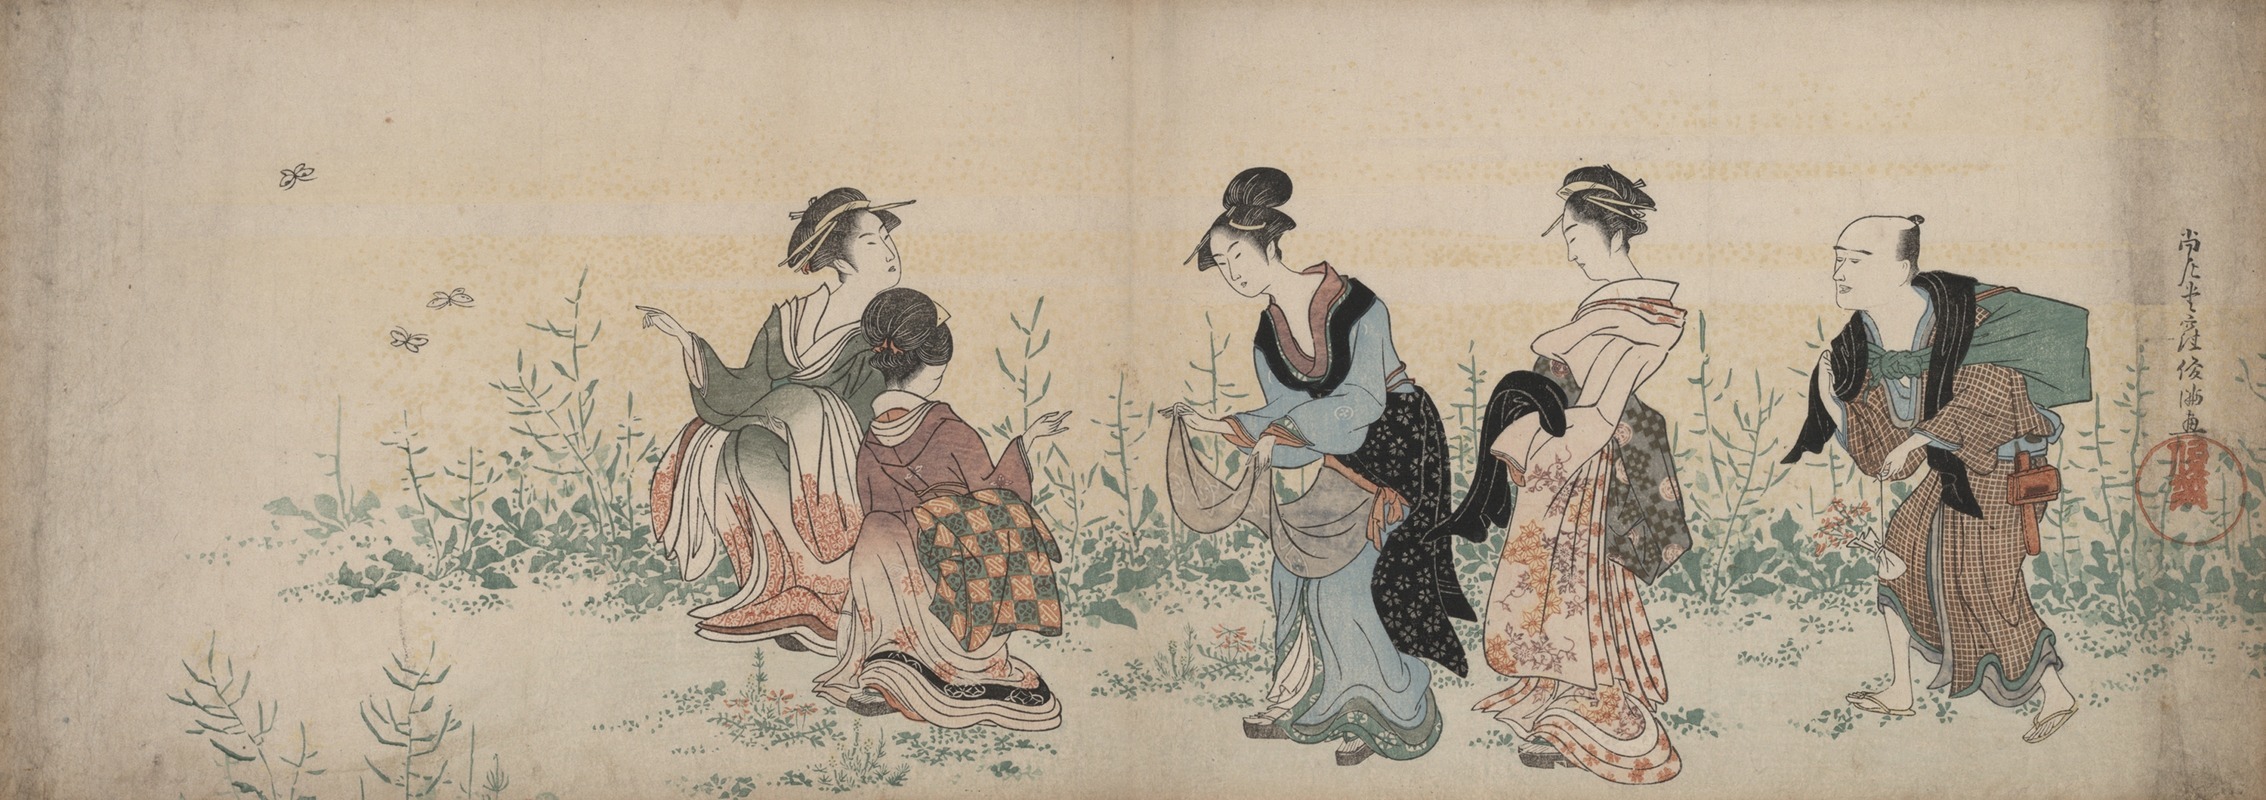 Kubo Shunman - Four girls and a servant enjoying wild flowers and butterflies